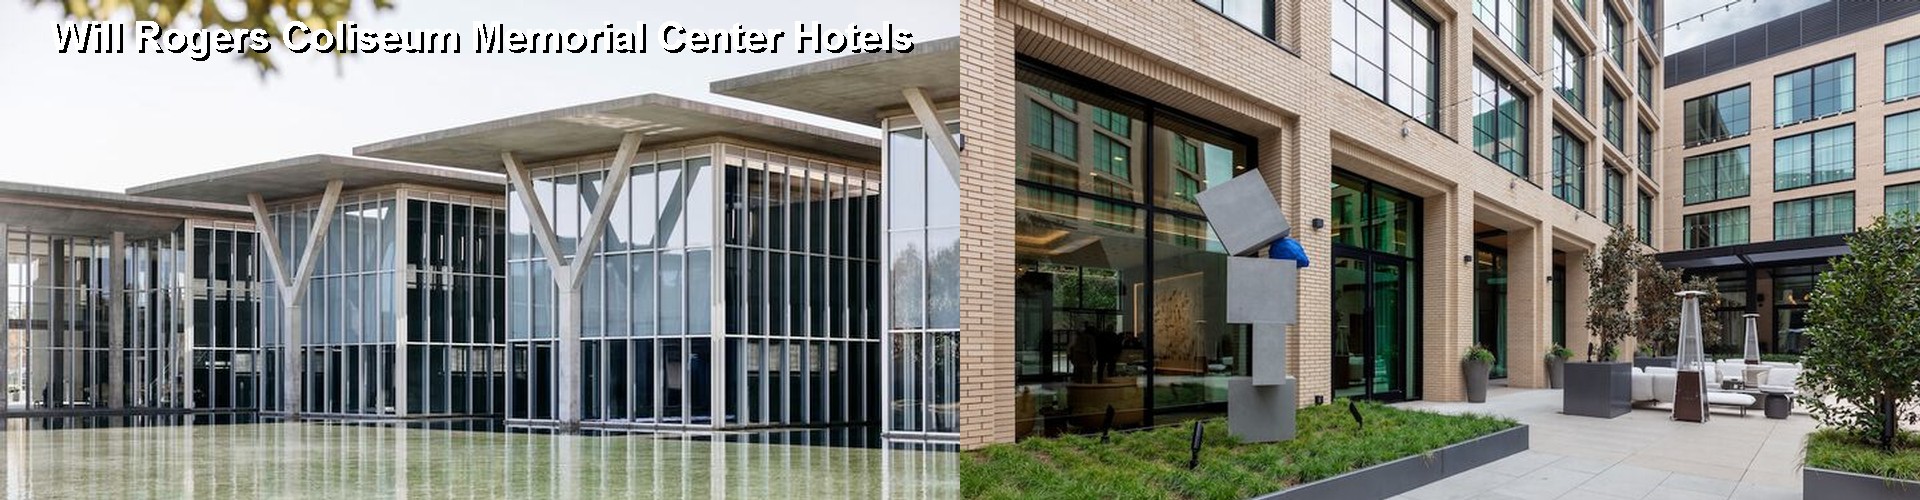 4 Best Hotels near Will Rogers Coliseum Memorial Center